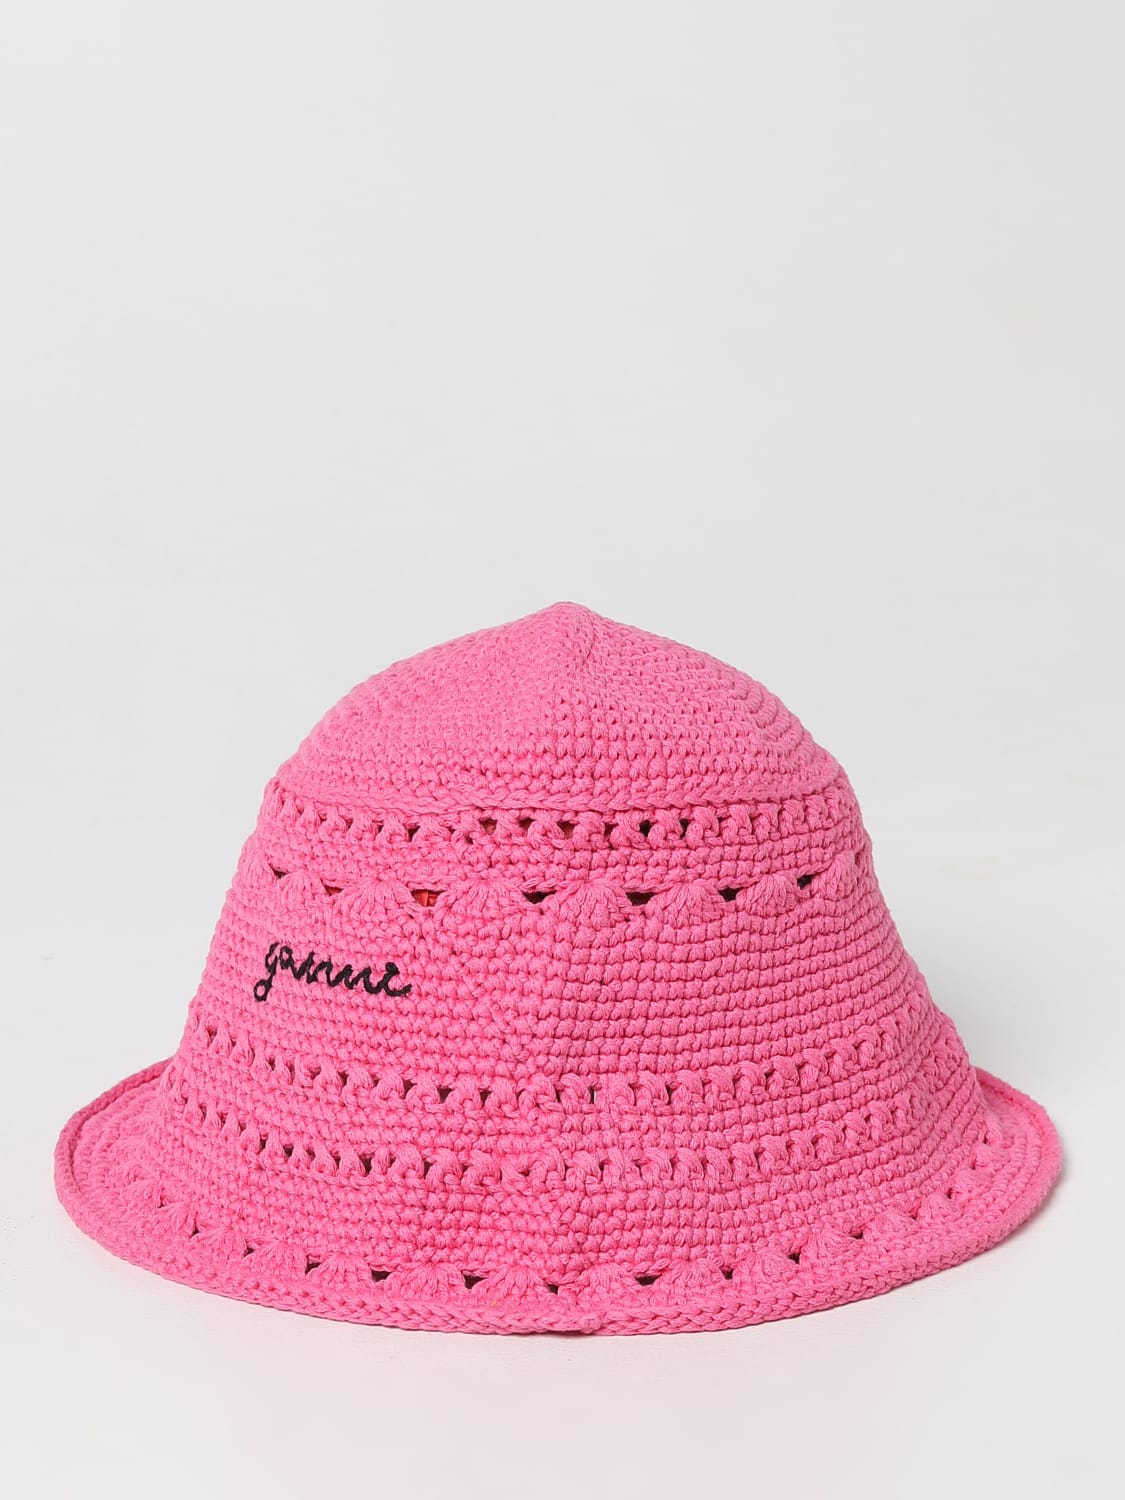 Ganni hat in organic cotton crochet with logo